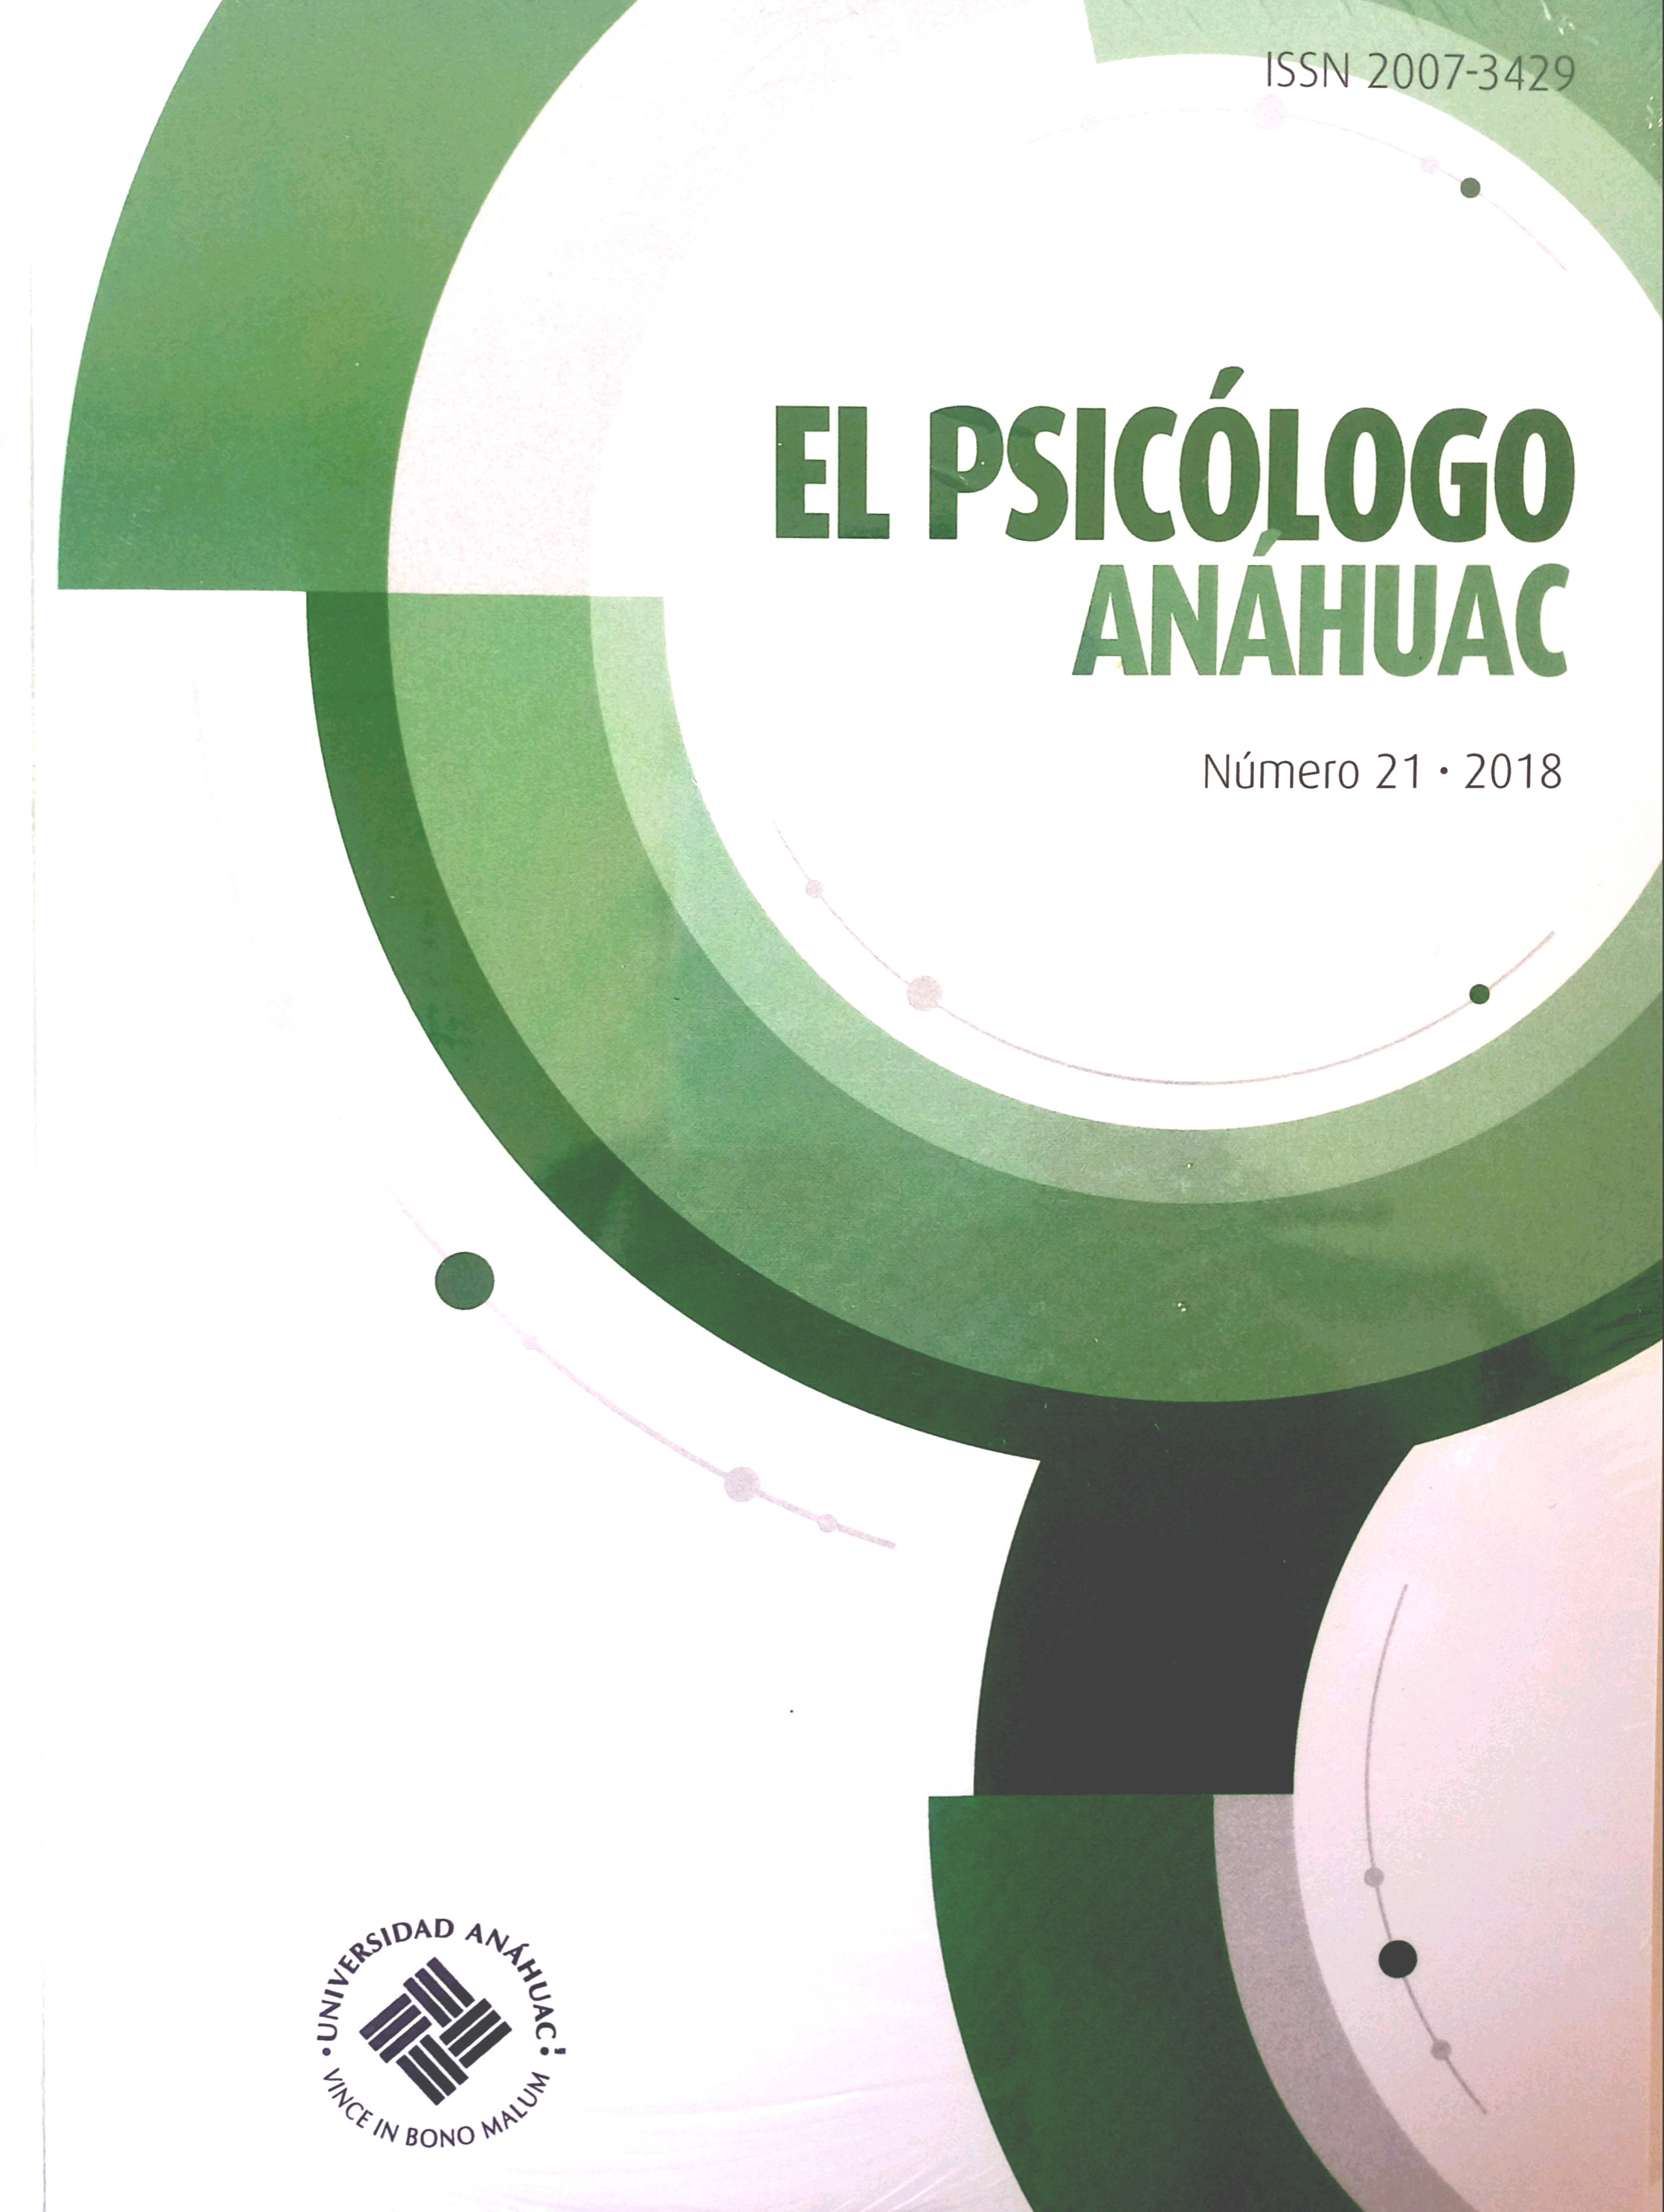 					Ver Vol. 21 Núm. 21 (2018): El Psicólogo Anáhuac, Vol. 21
				